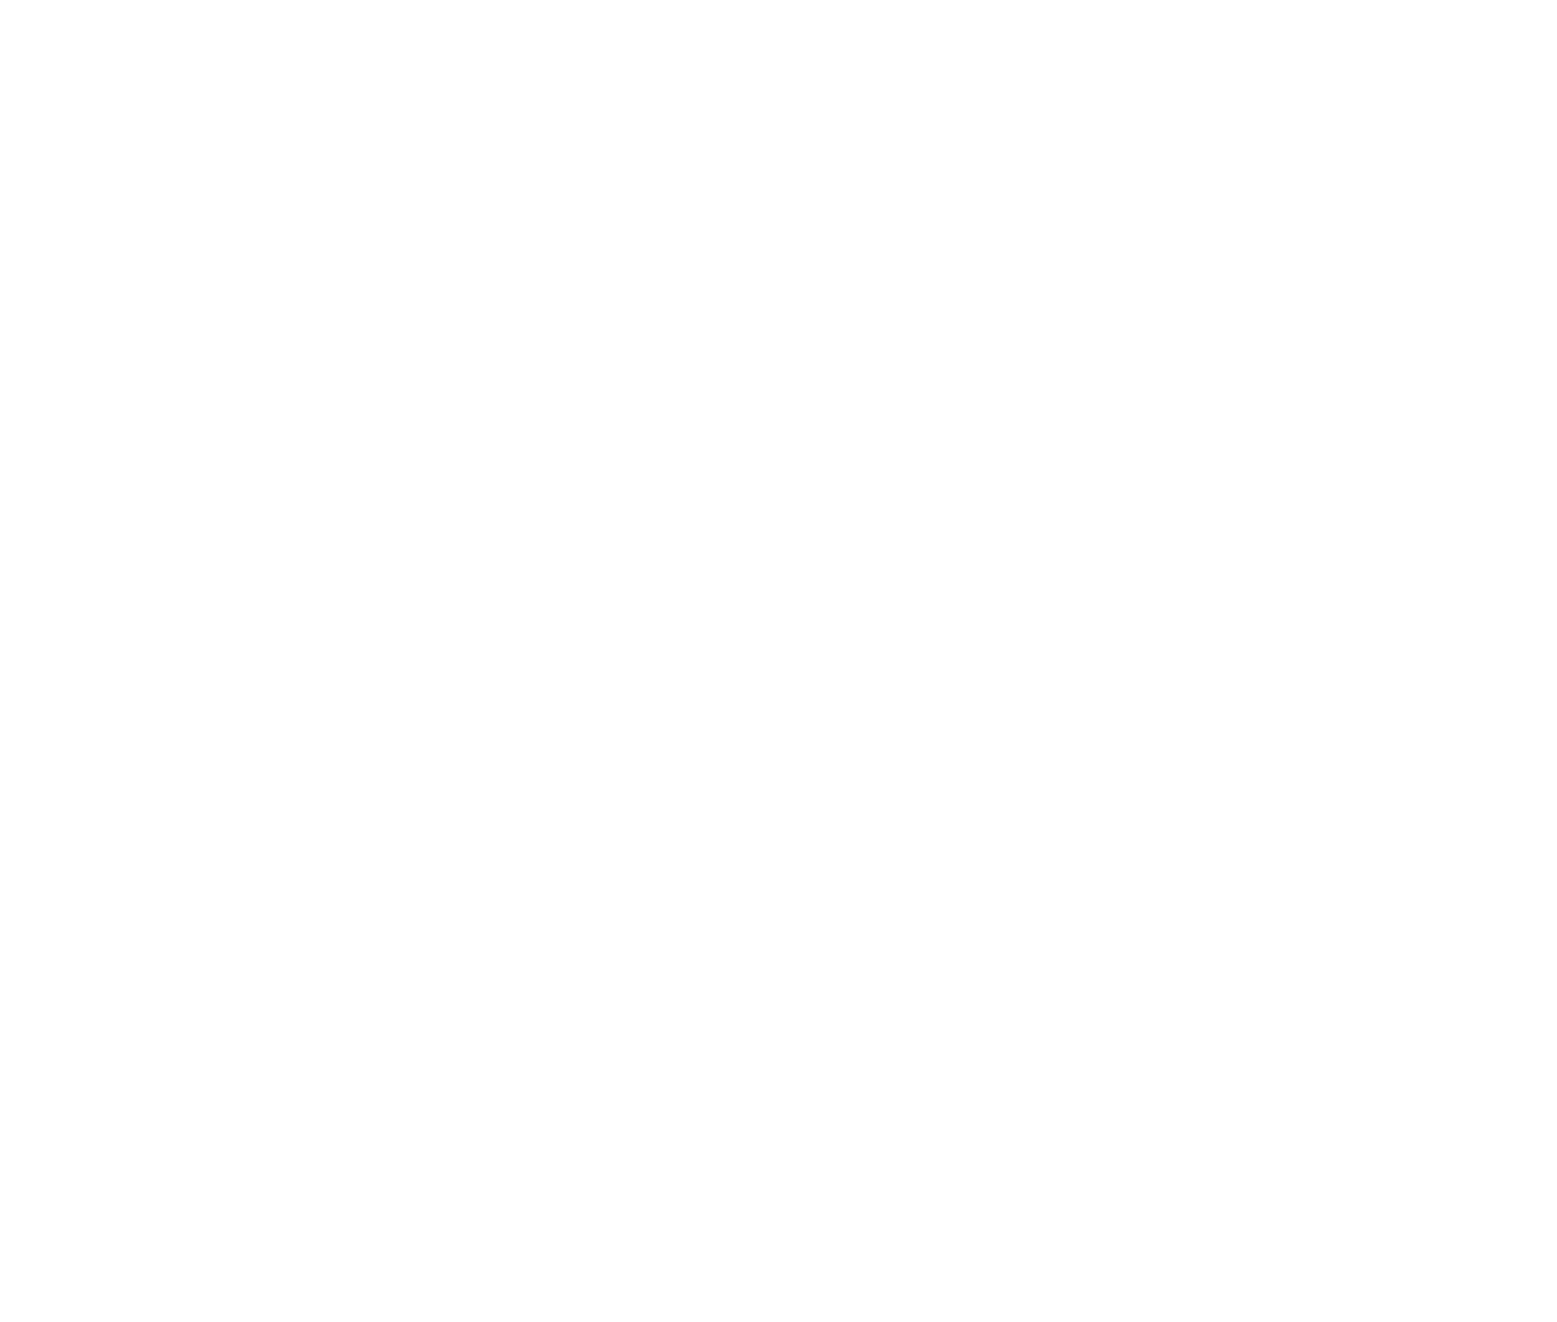 Dropbox logo for dark backgrounds (transparent PNG)